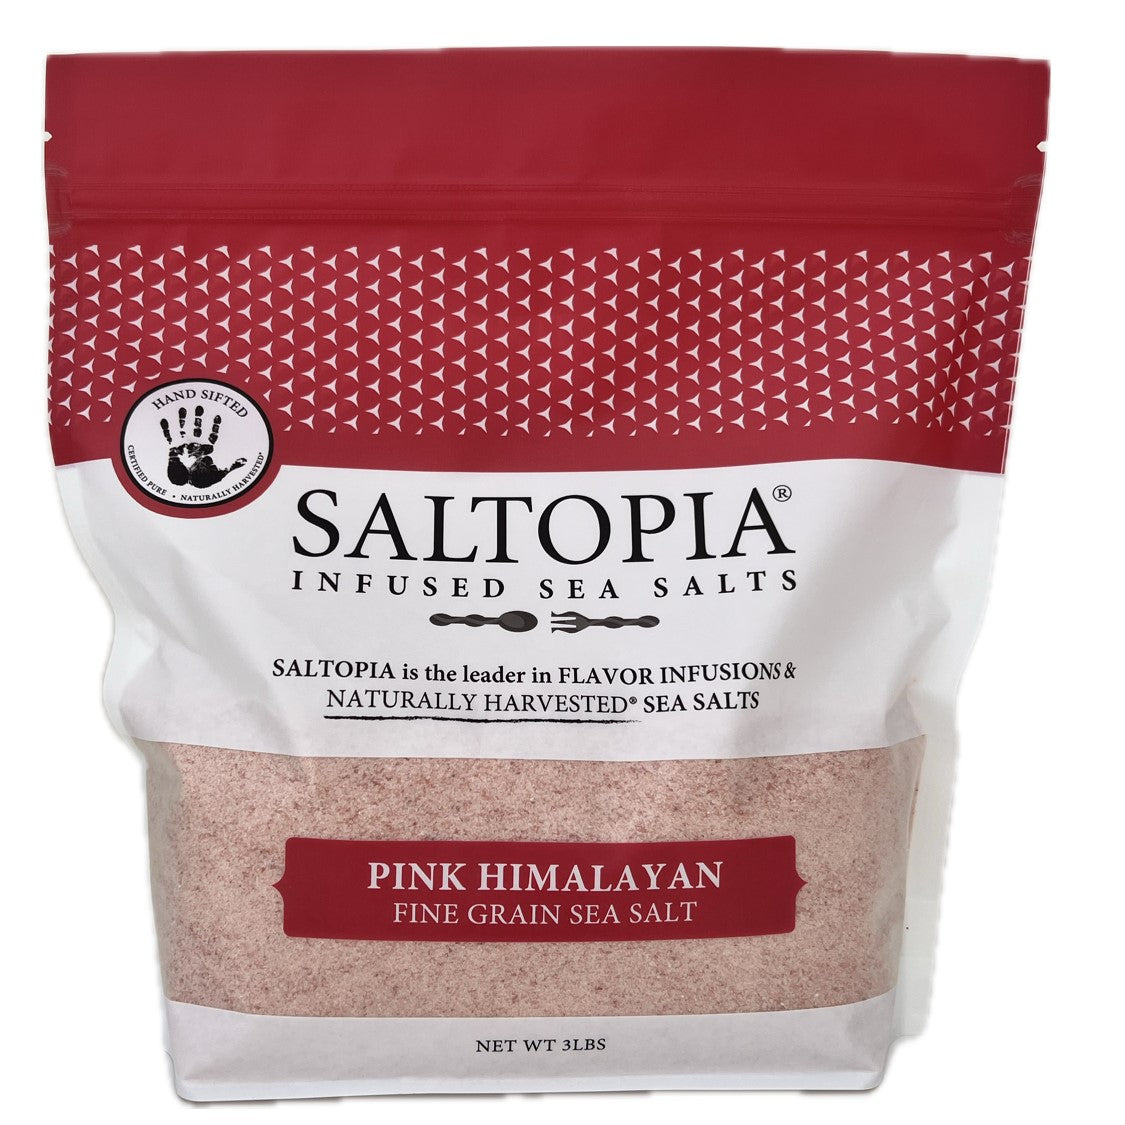 HIMALAYAN PINK fine grain sea salt